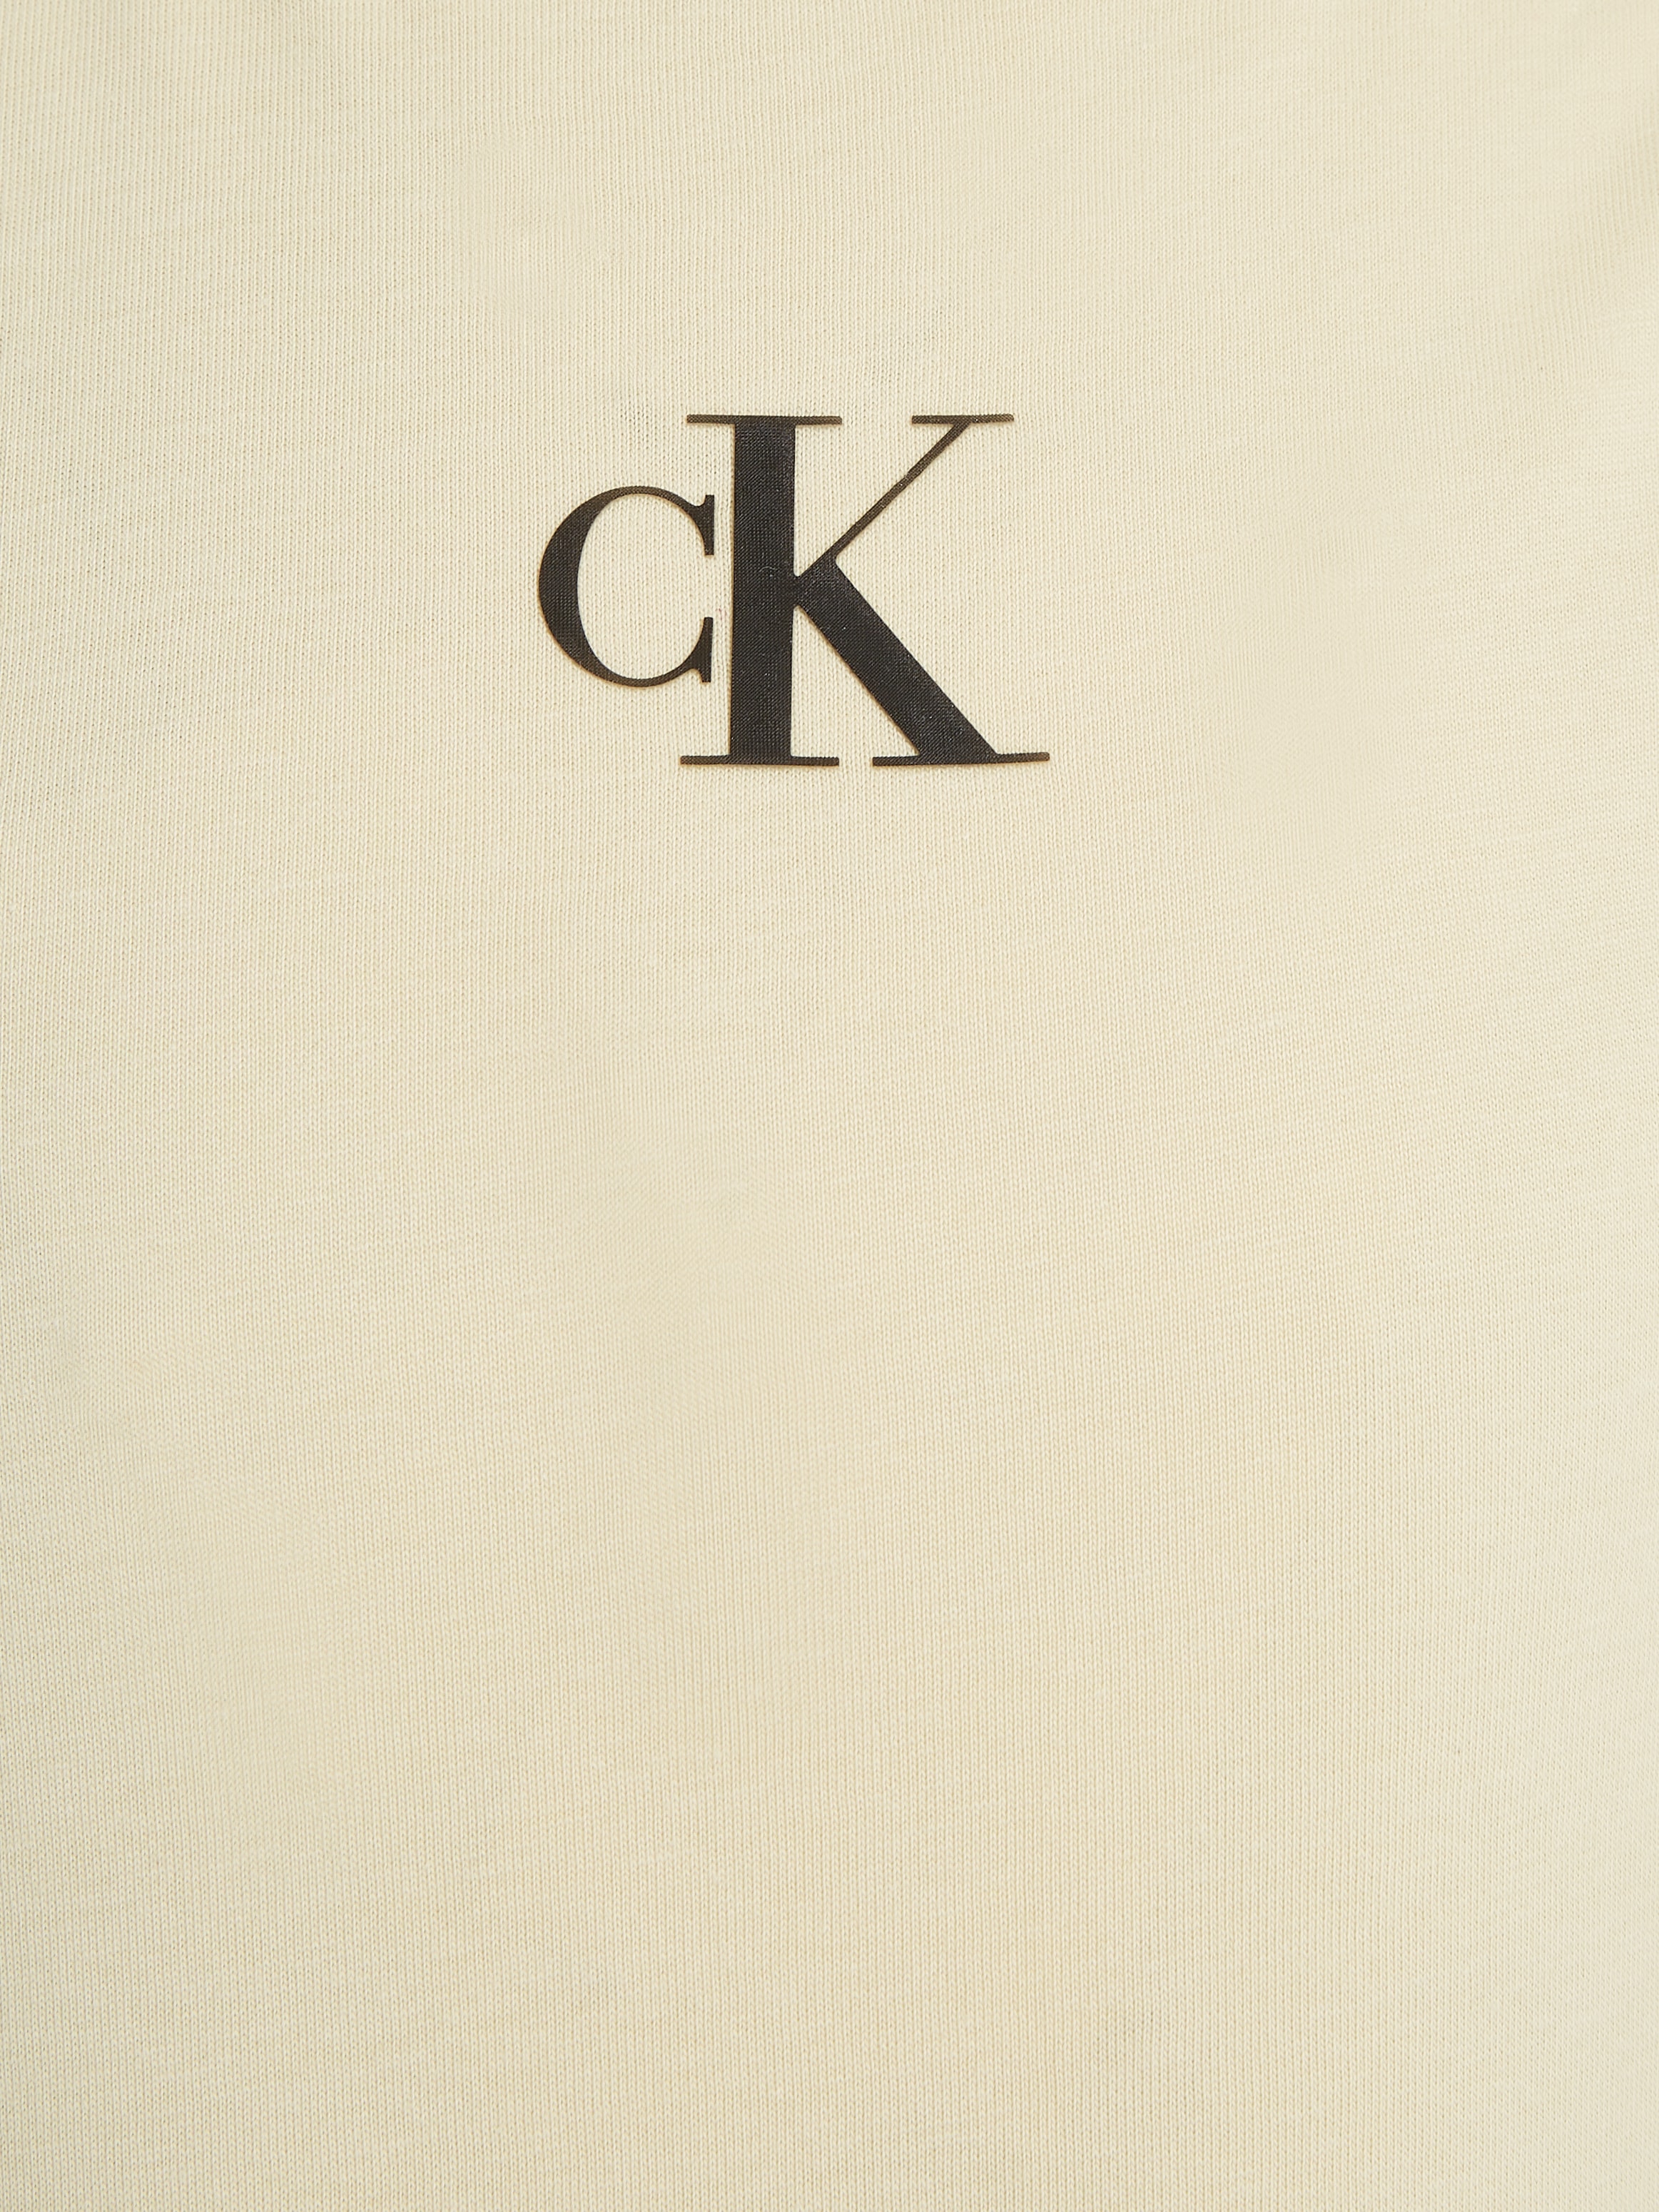 Calvin Klein Jeans Tanktop »CK LOGO TANK TOP«, Kinder bis 16 Jahre